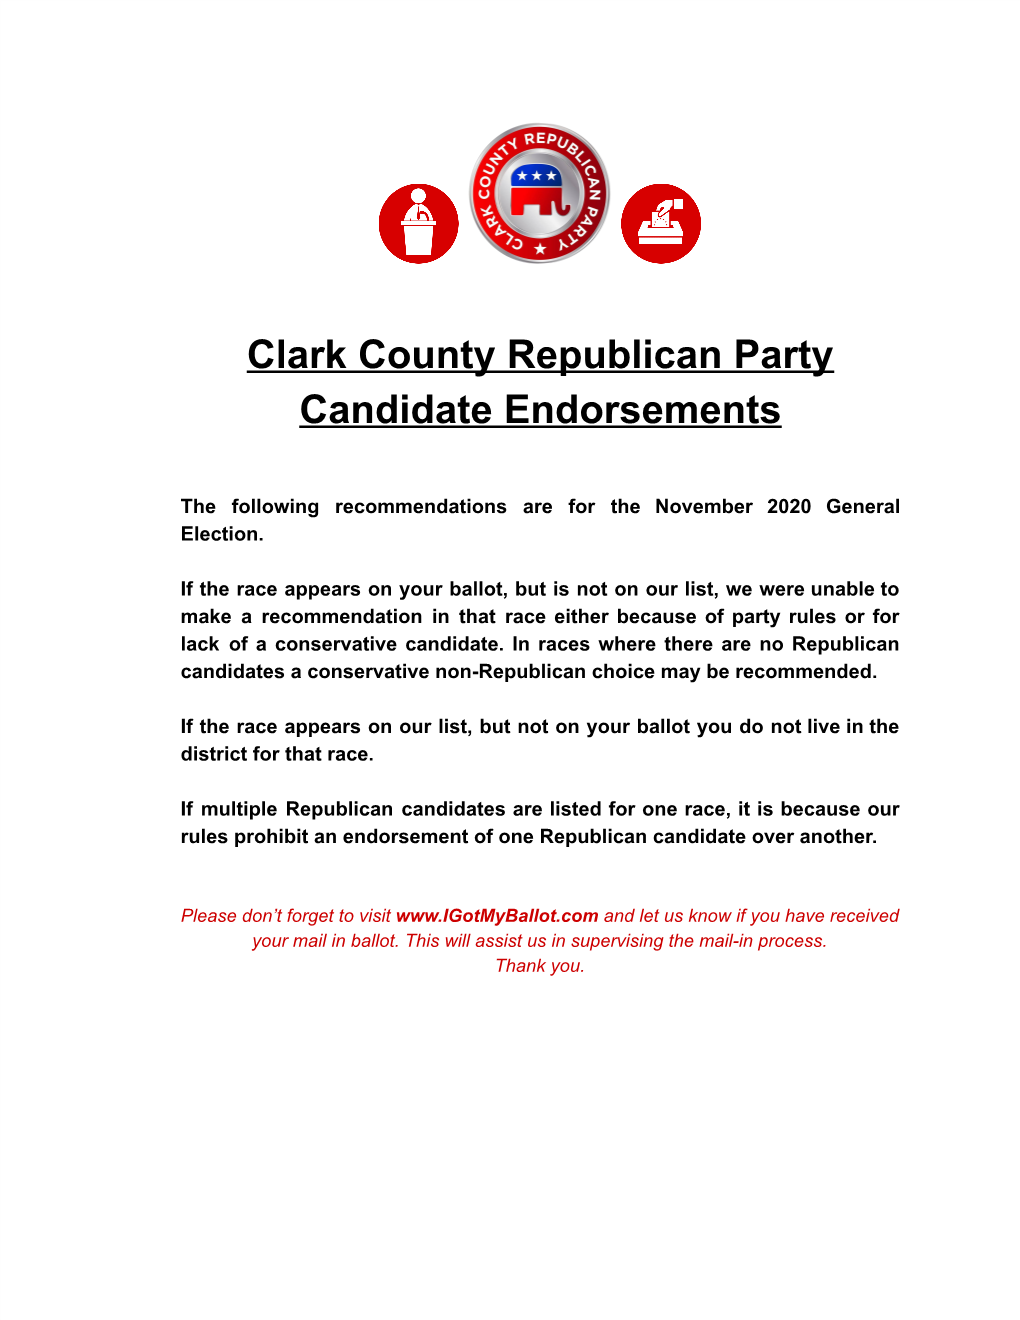 Clark County Republican Party Candidate Endorsements